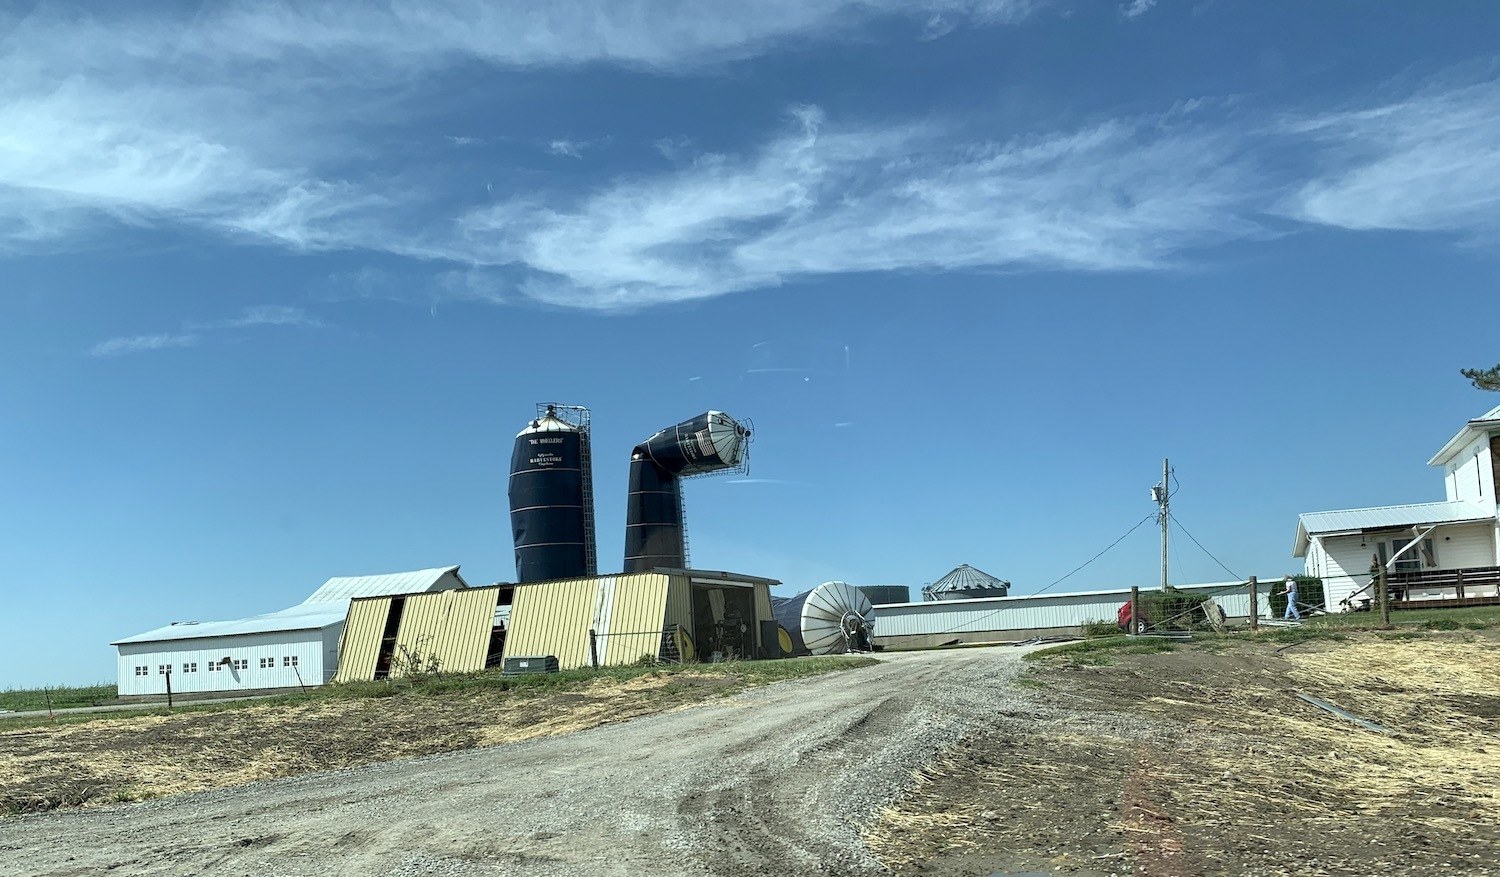 Grain bins seen in the distance damaged by the derecho in Benton County. August 2020